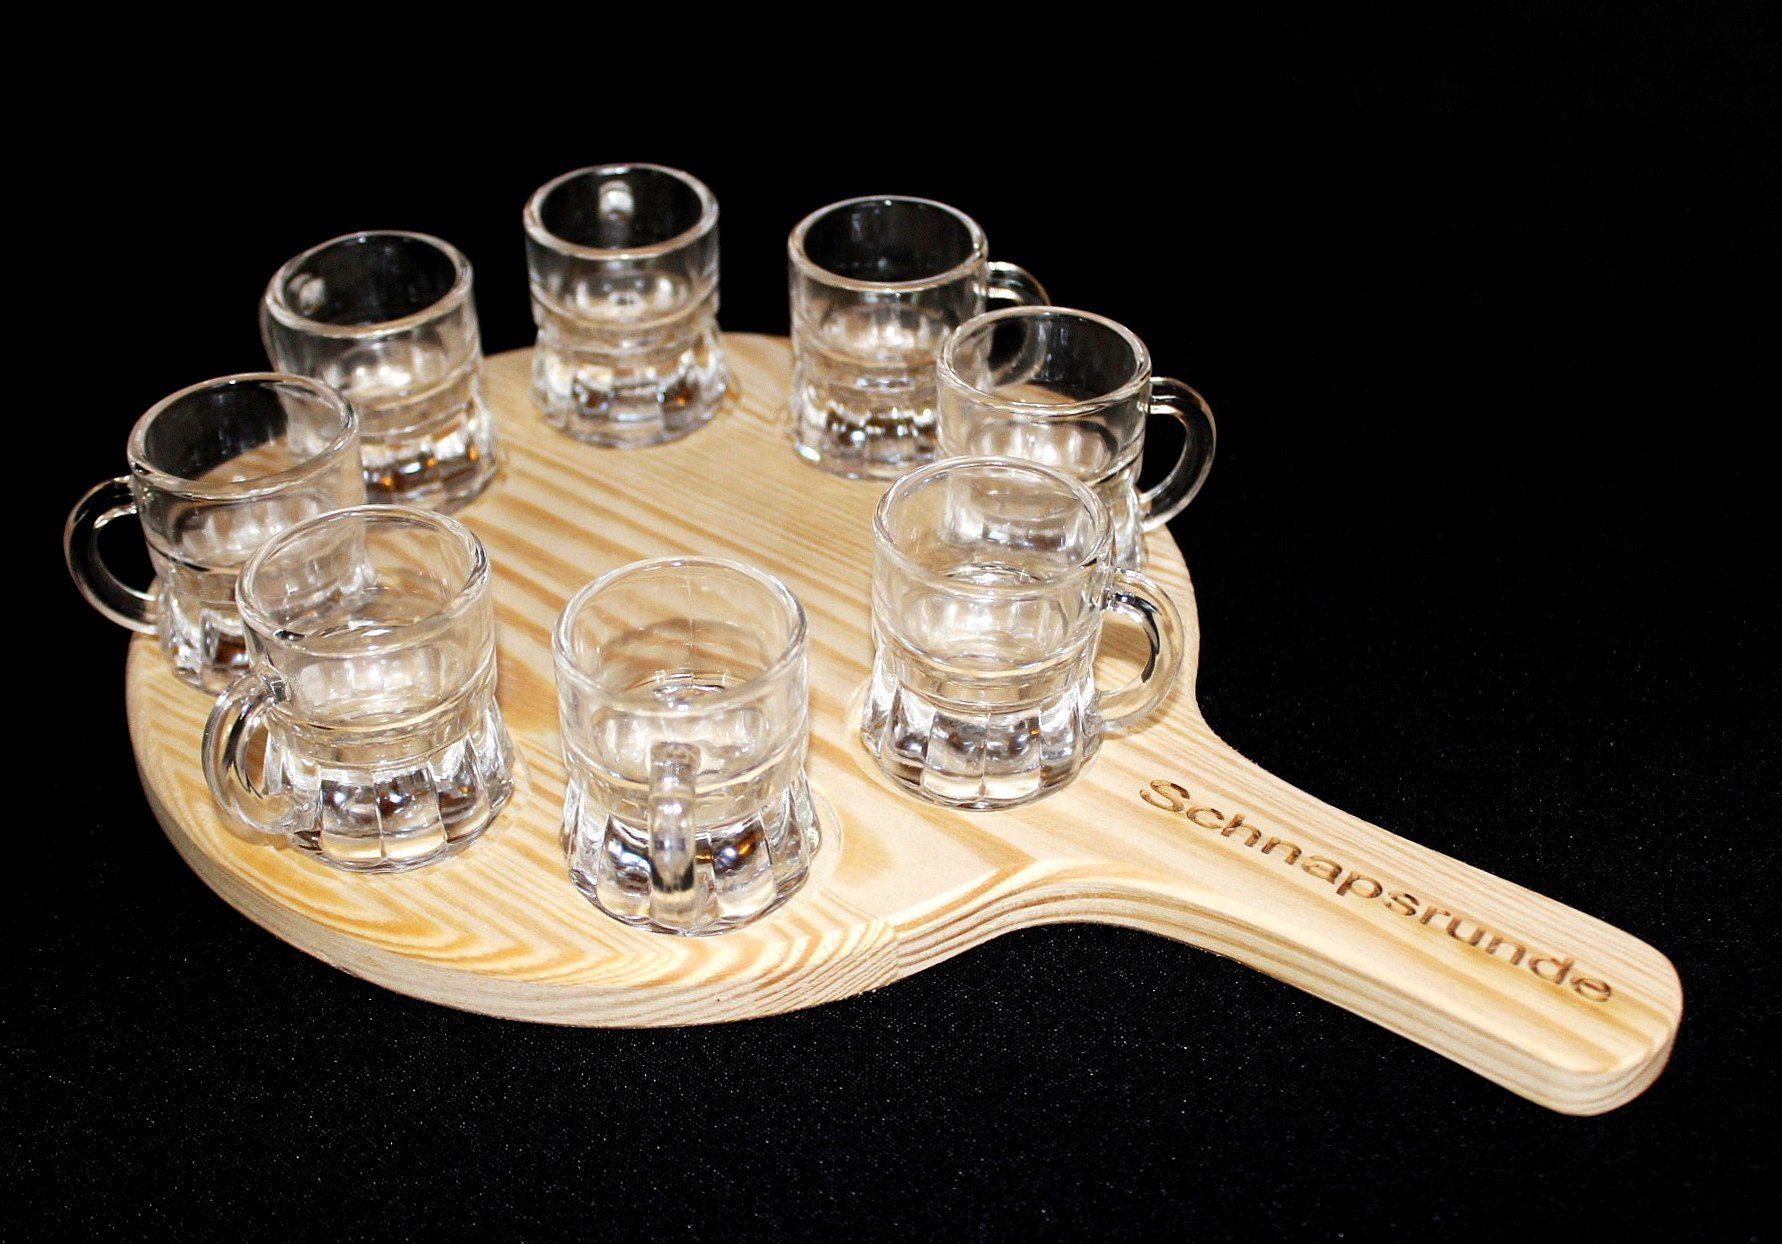 DanDiBo Schnapsglas Schnapsrunde 20 cm mit Gravur und 8 Скло Schnapsbrett Leiste Schnapslatte, Holz